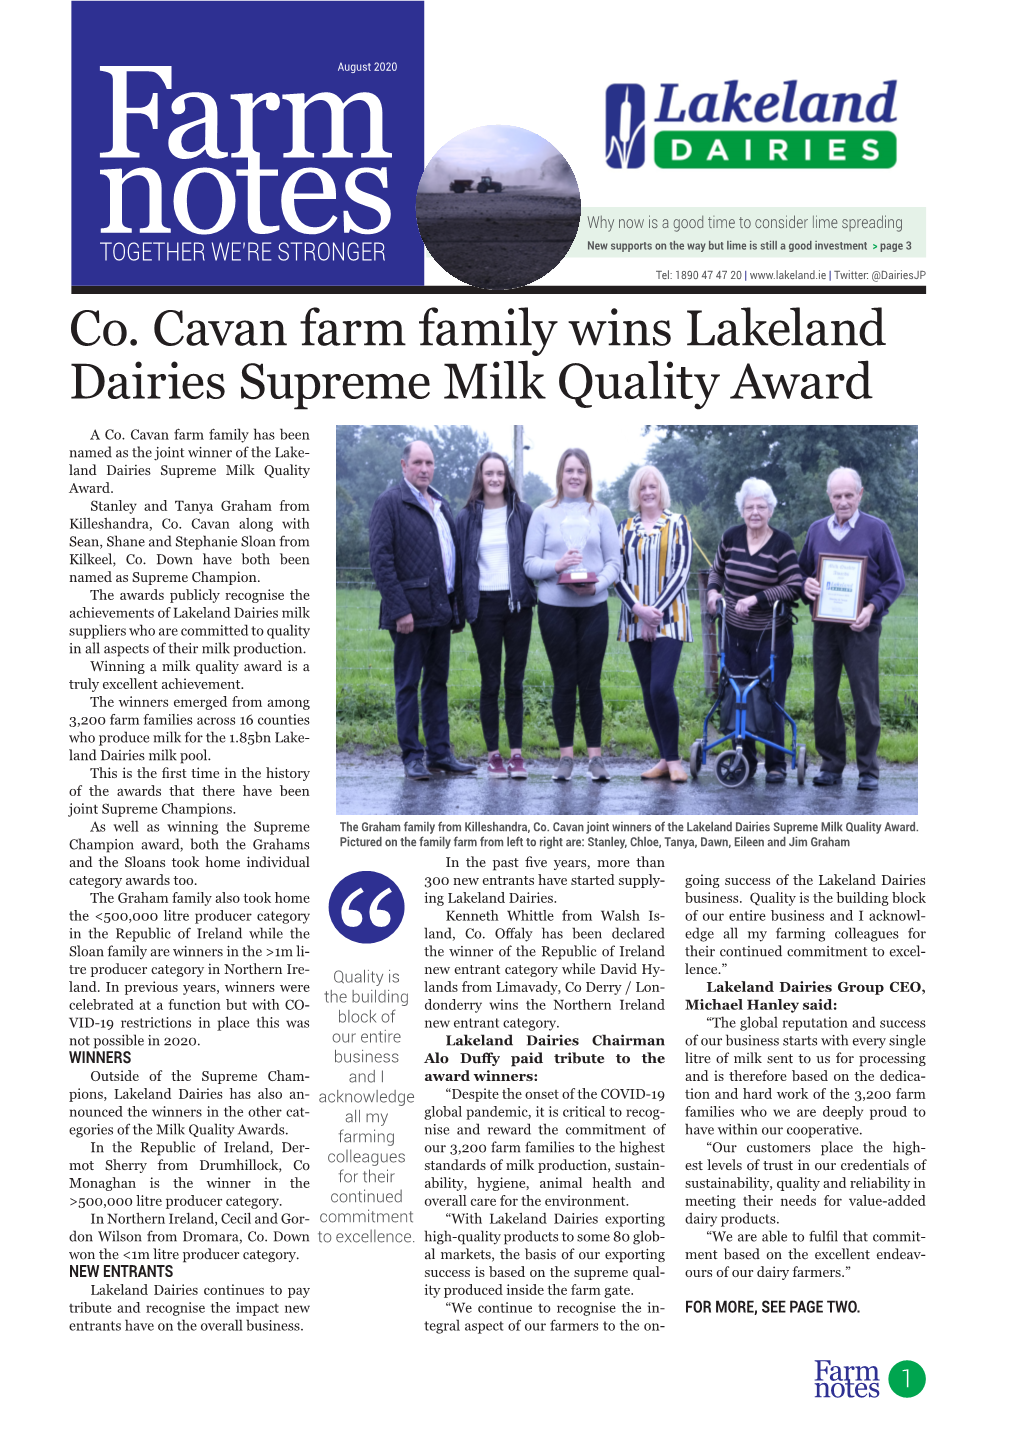 Co. Cavan Farm Family Wins Lakeland Dairies Supreme Milk Quality Award